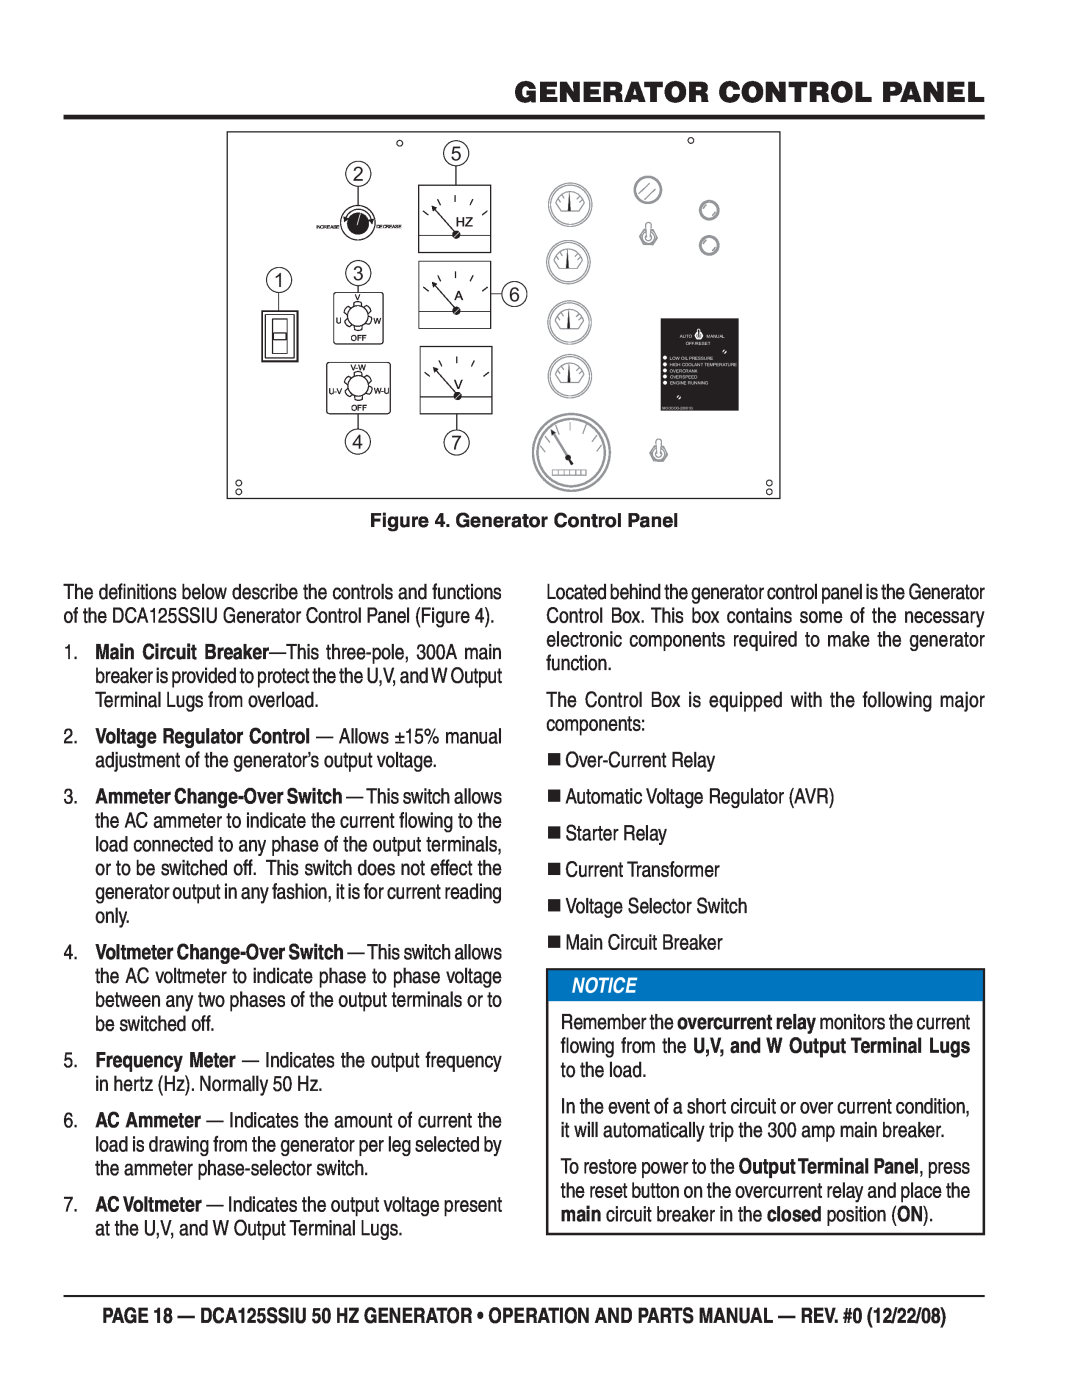 Multiquip DCA125SSIU manual Generator Control Panel, Notice 